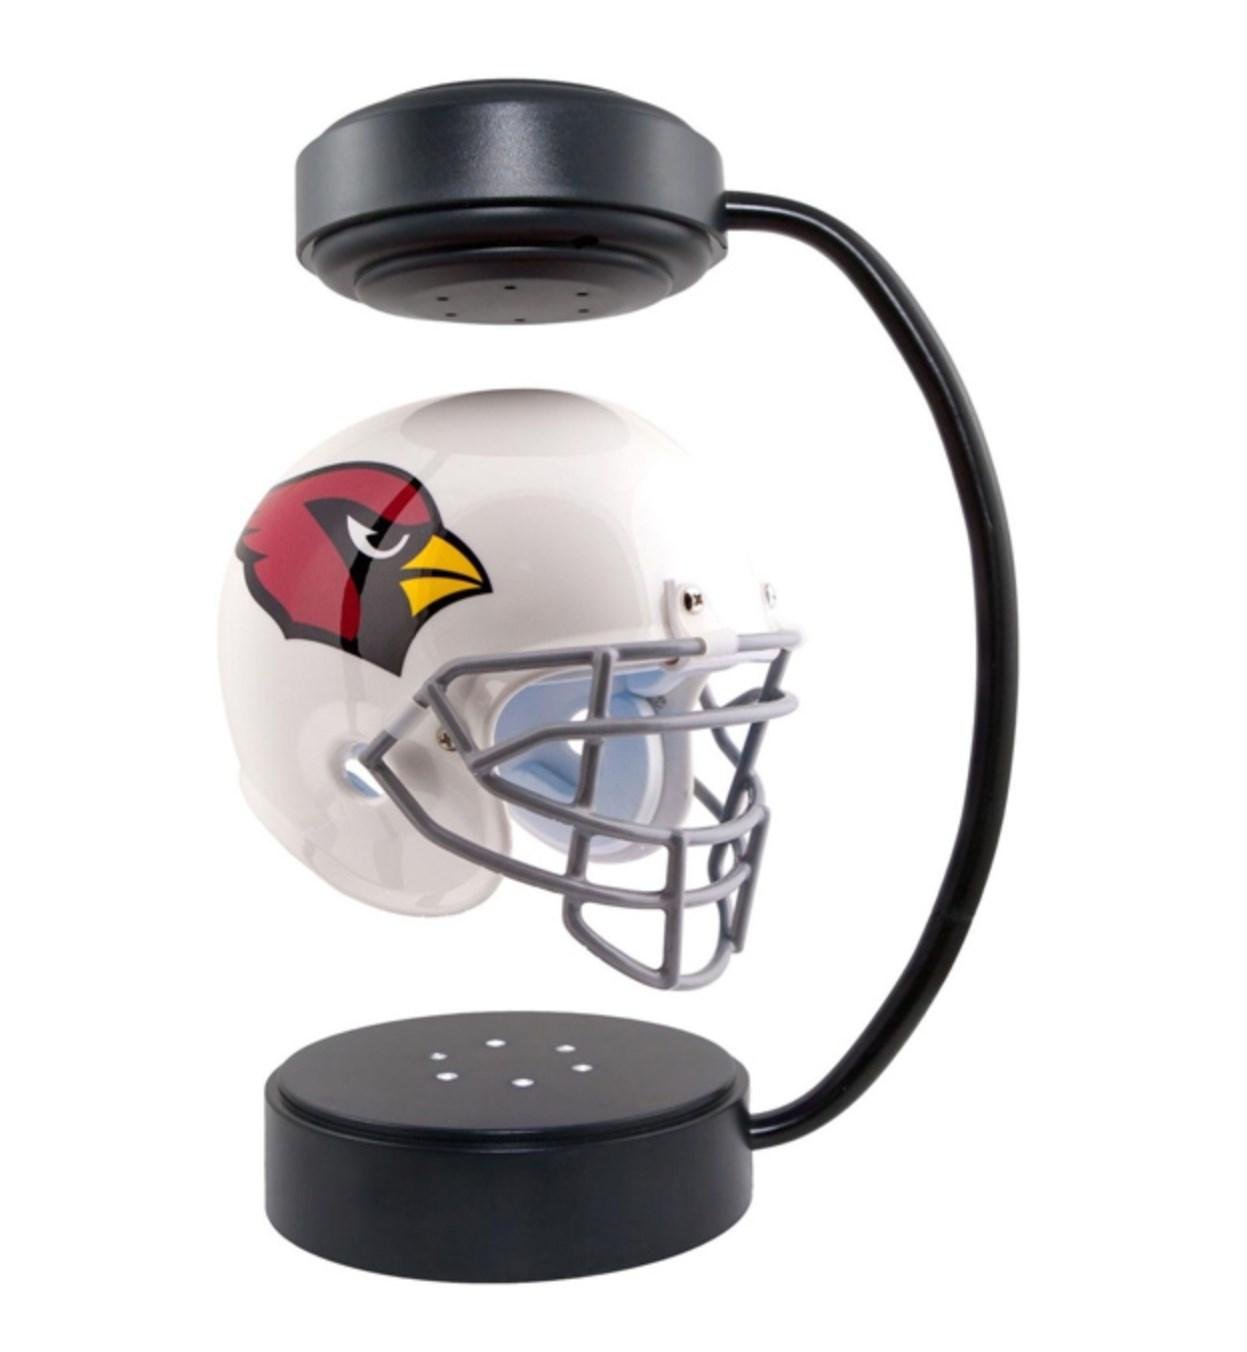 360 rotating magnetic levitation floating NFL hover helmet display stand 